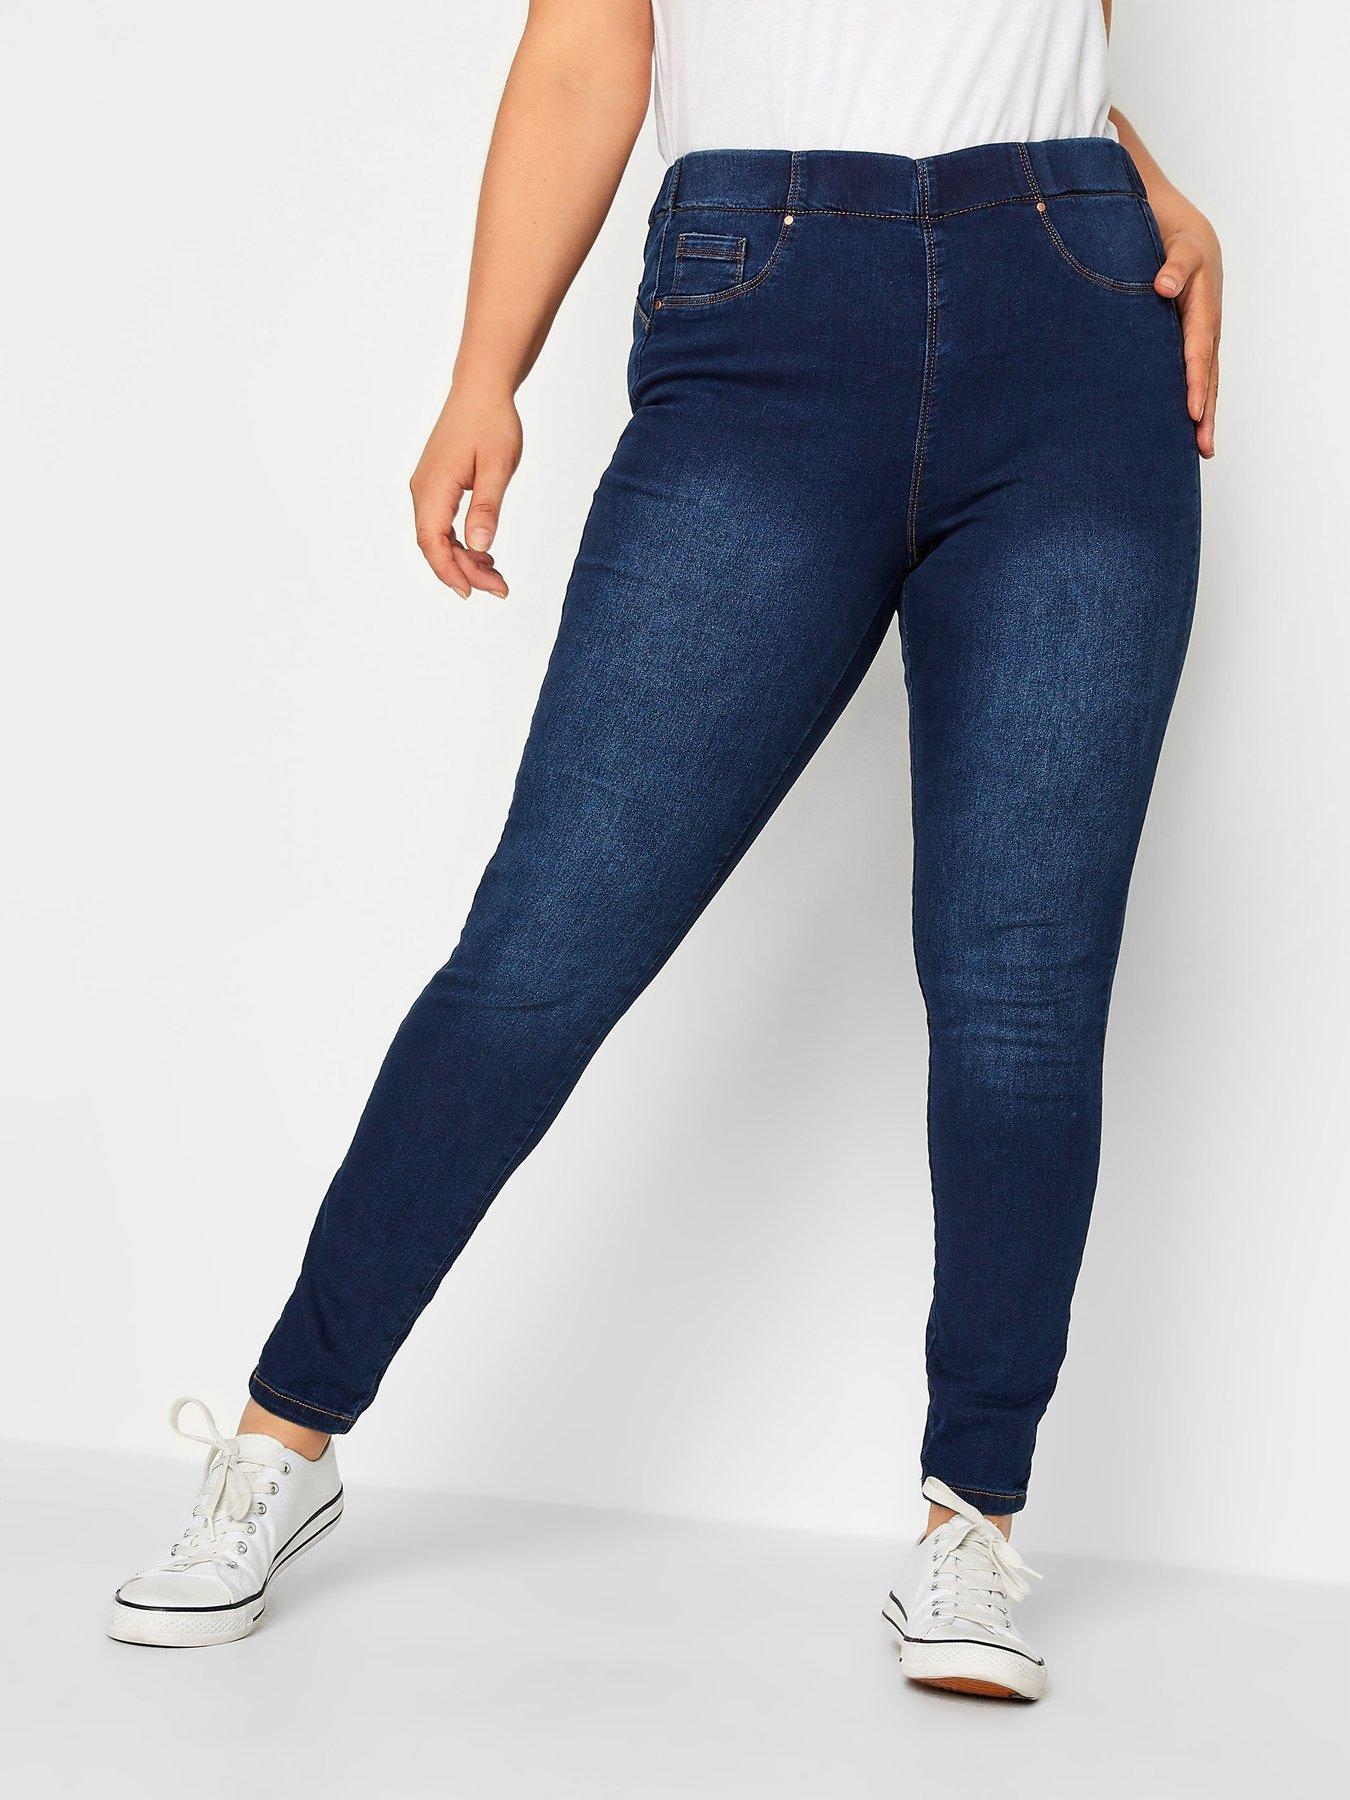 Buy Womens Plus Size High Waisted Denim Blue Black Jeggings Jean